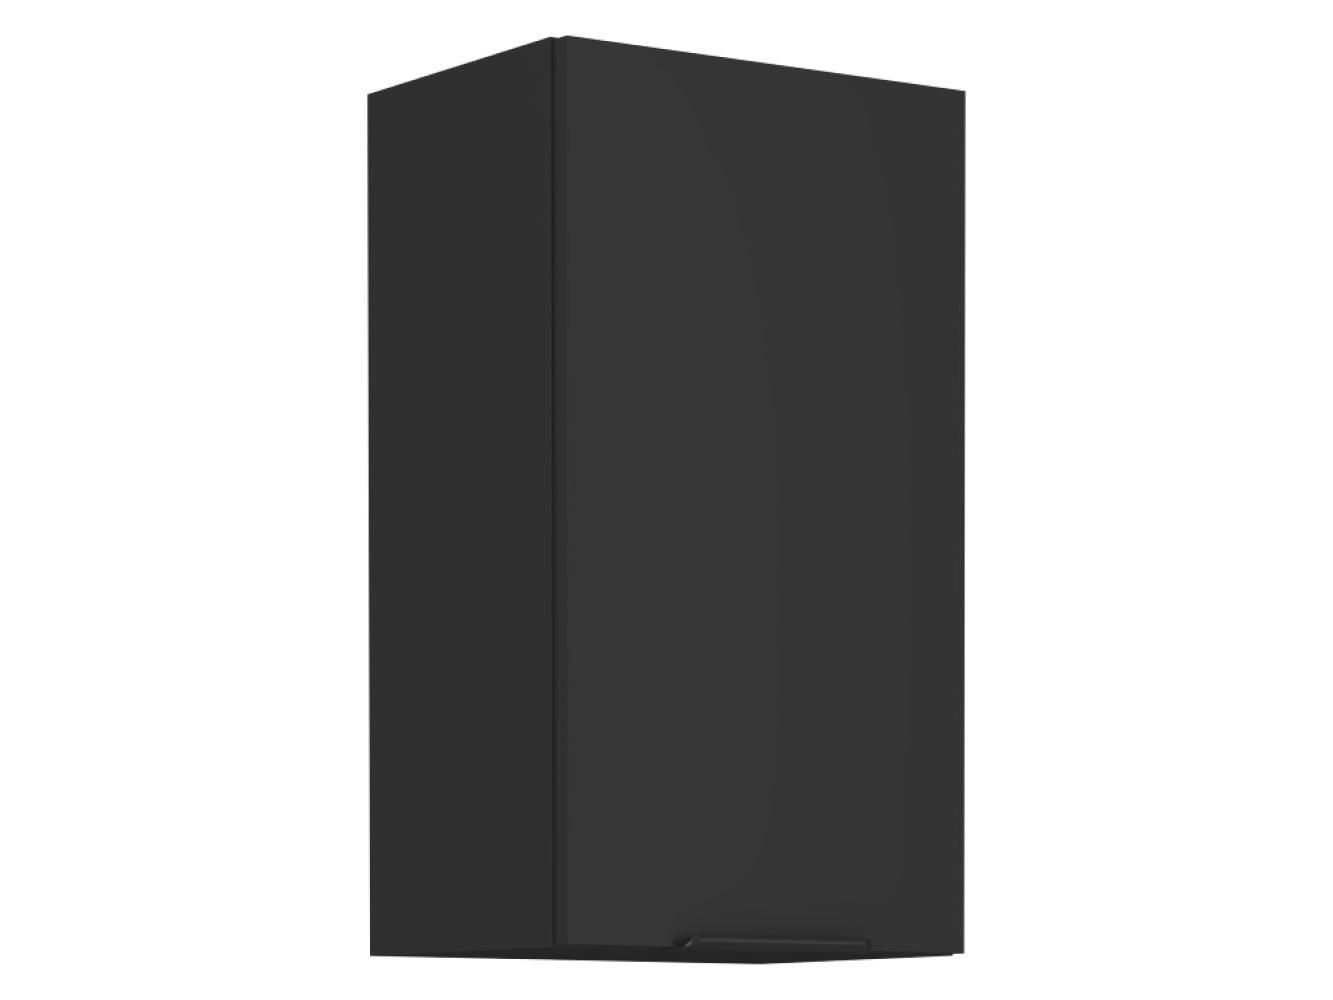 Horní kuchyňská skříňka Sobera 40 G 72 1F (černá)